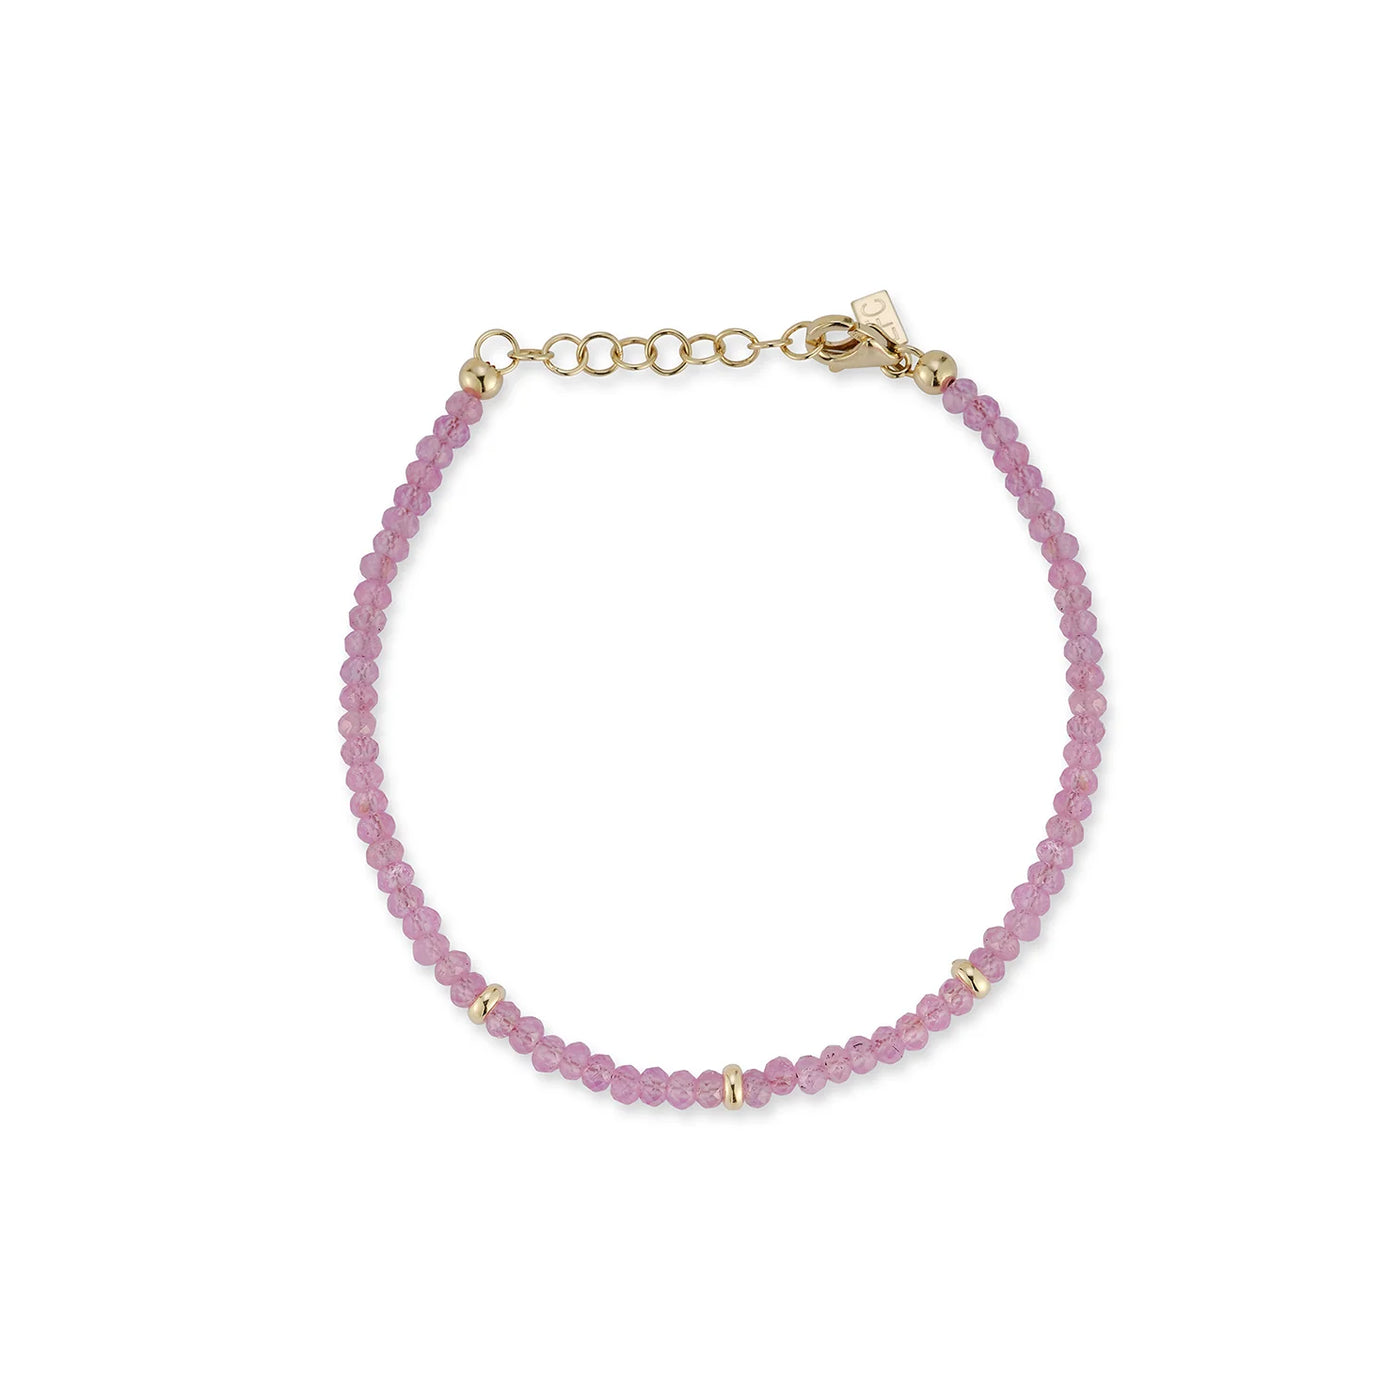 Pink Sapphire Birthstone Bead Bracelet